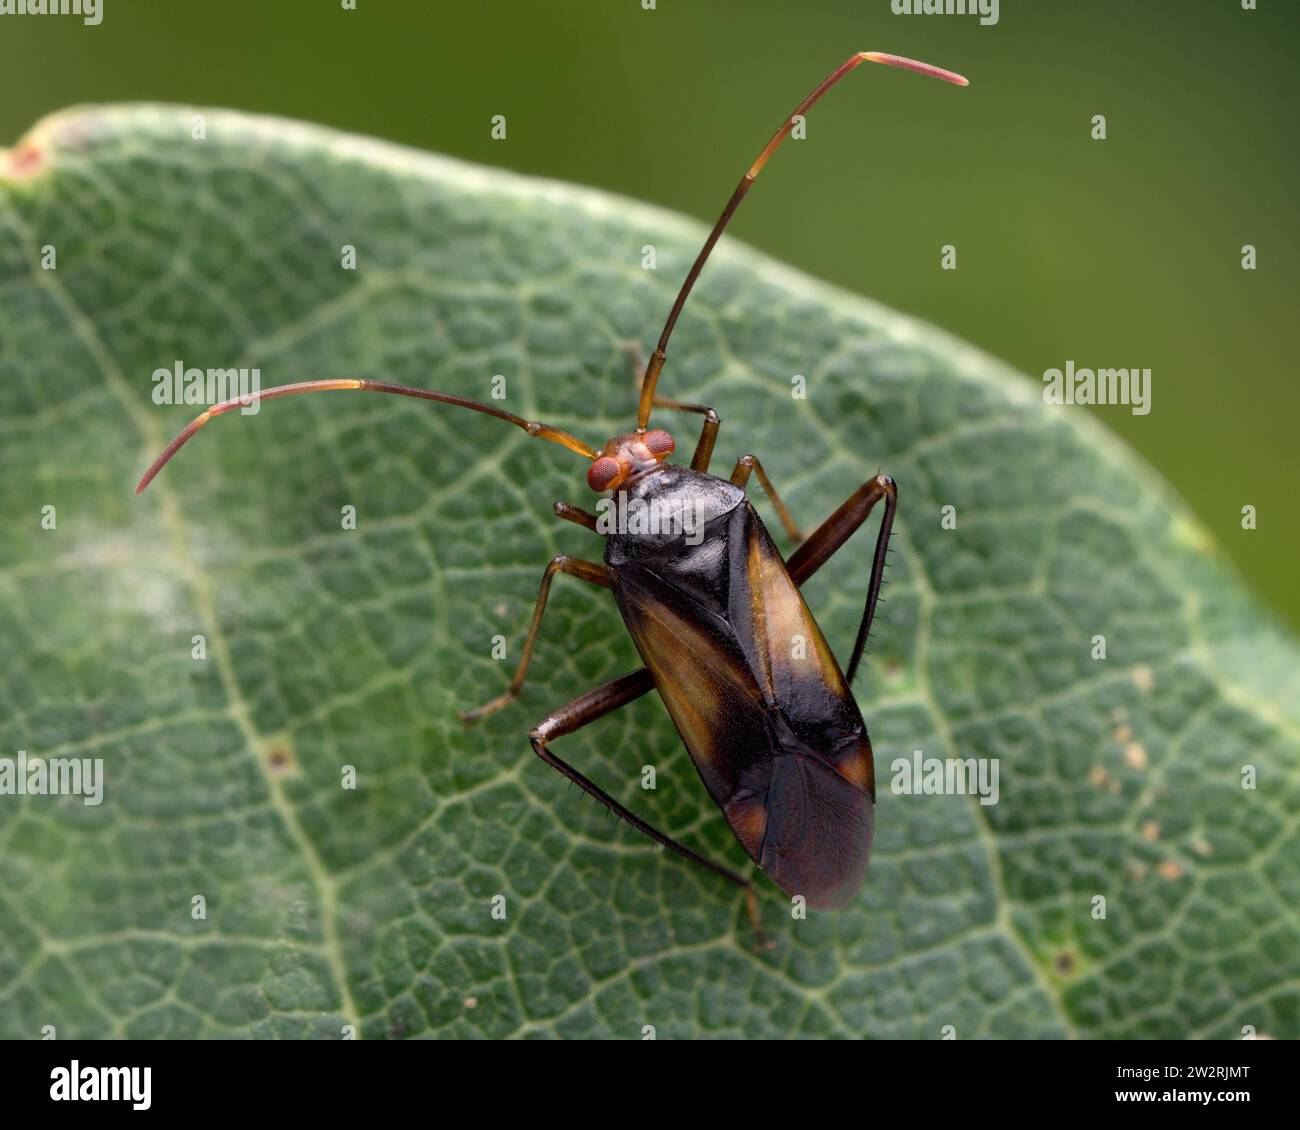 Megacoelum infusum mirid bug on oak leaf. Tipperary, Ireland Stock Photo